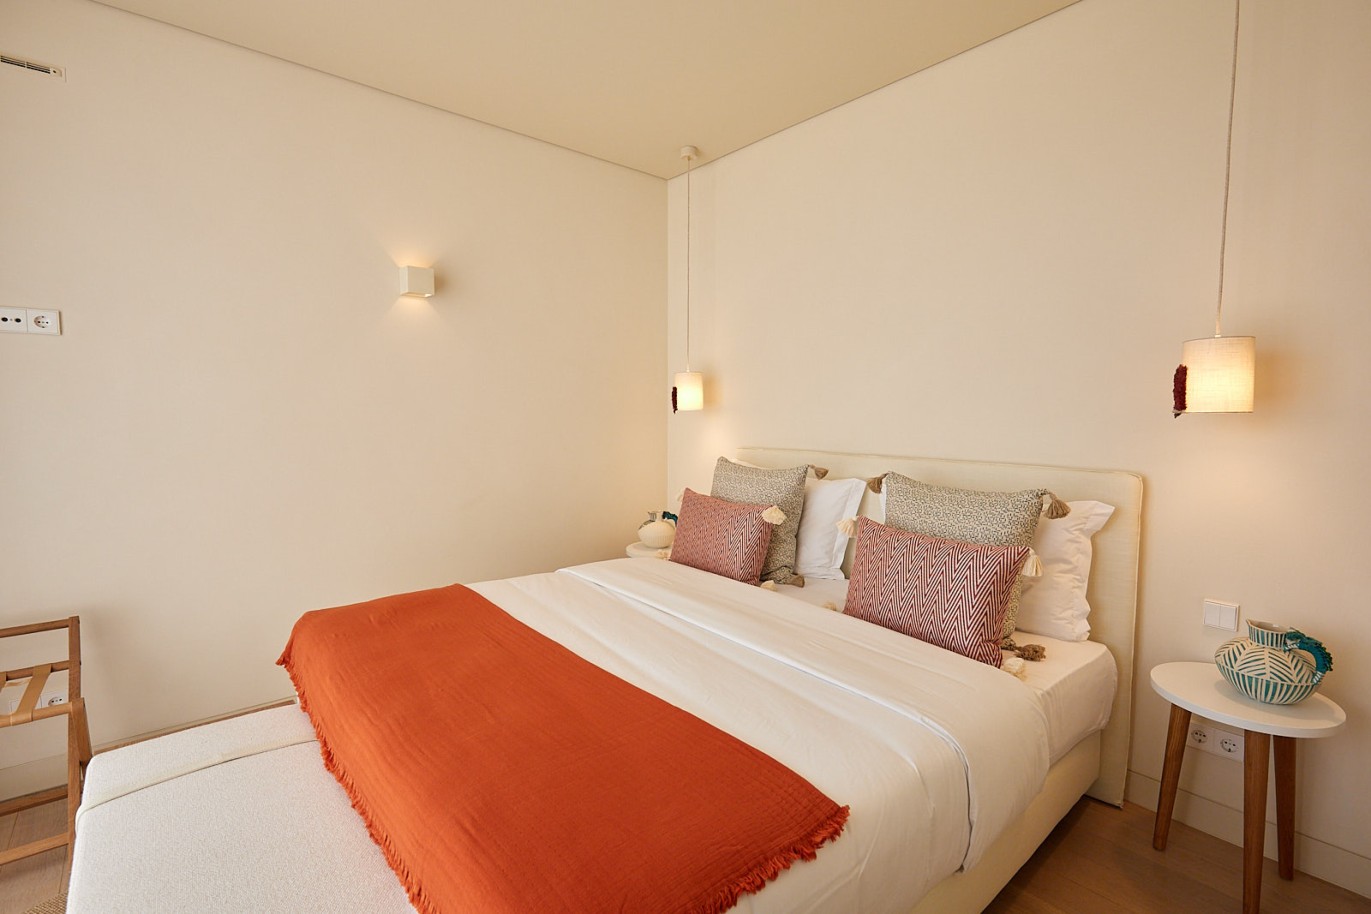 2 bedroom apartment in resort, for sale in Porches, Algarve_230776